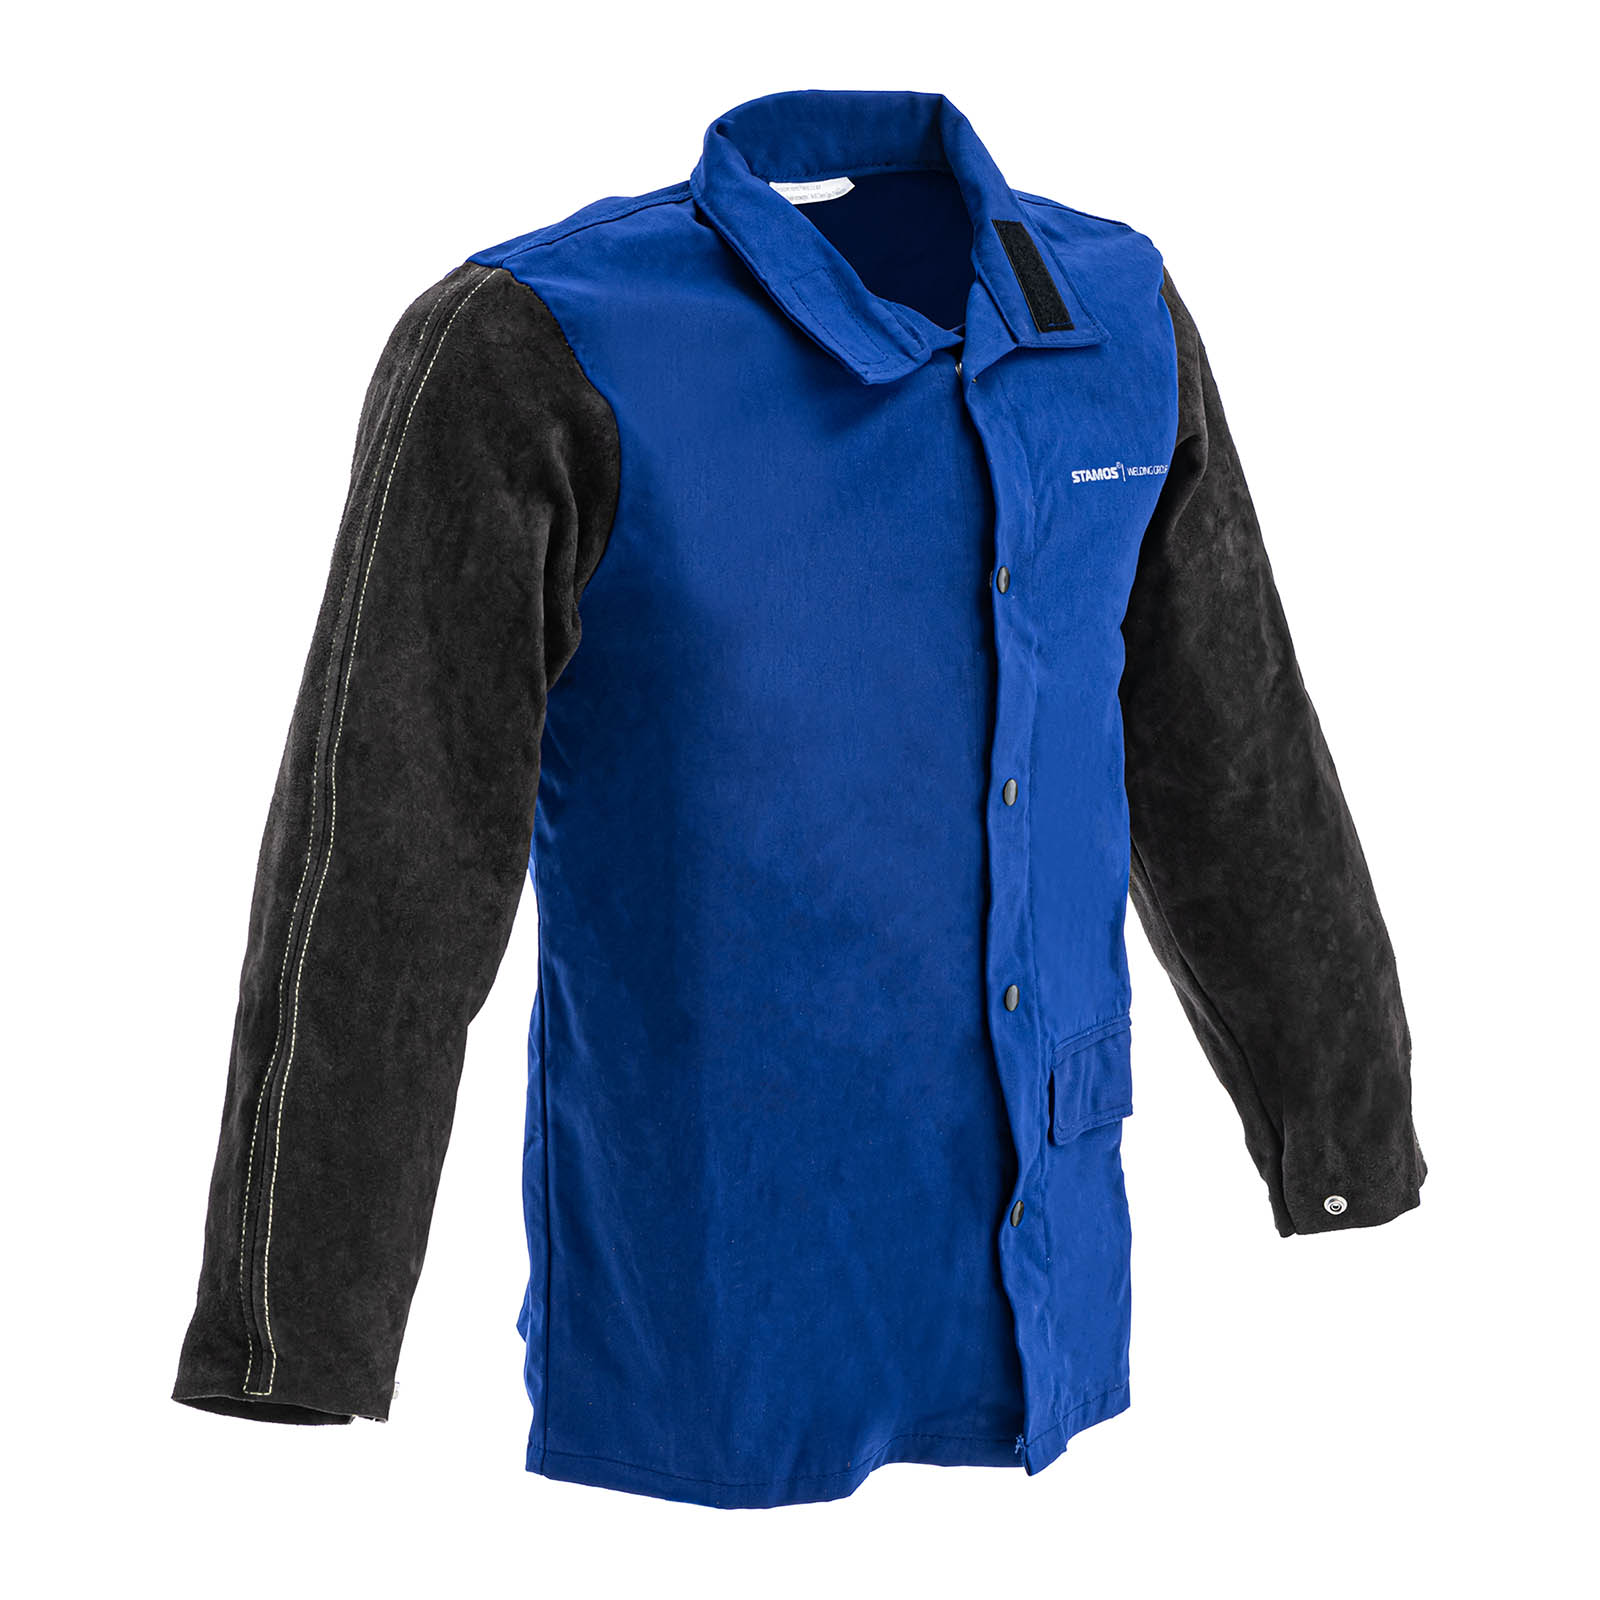 Welding Jacket - made of cotton sateen / cow split leather - size L - black / blue